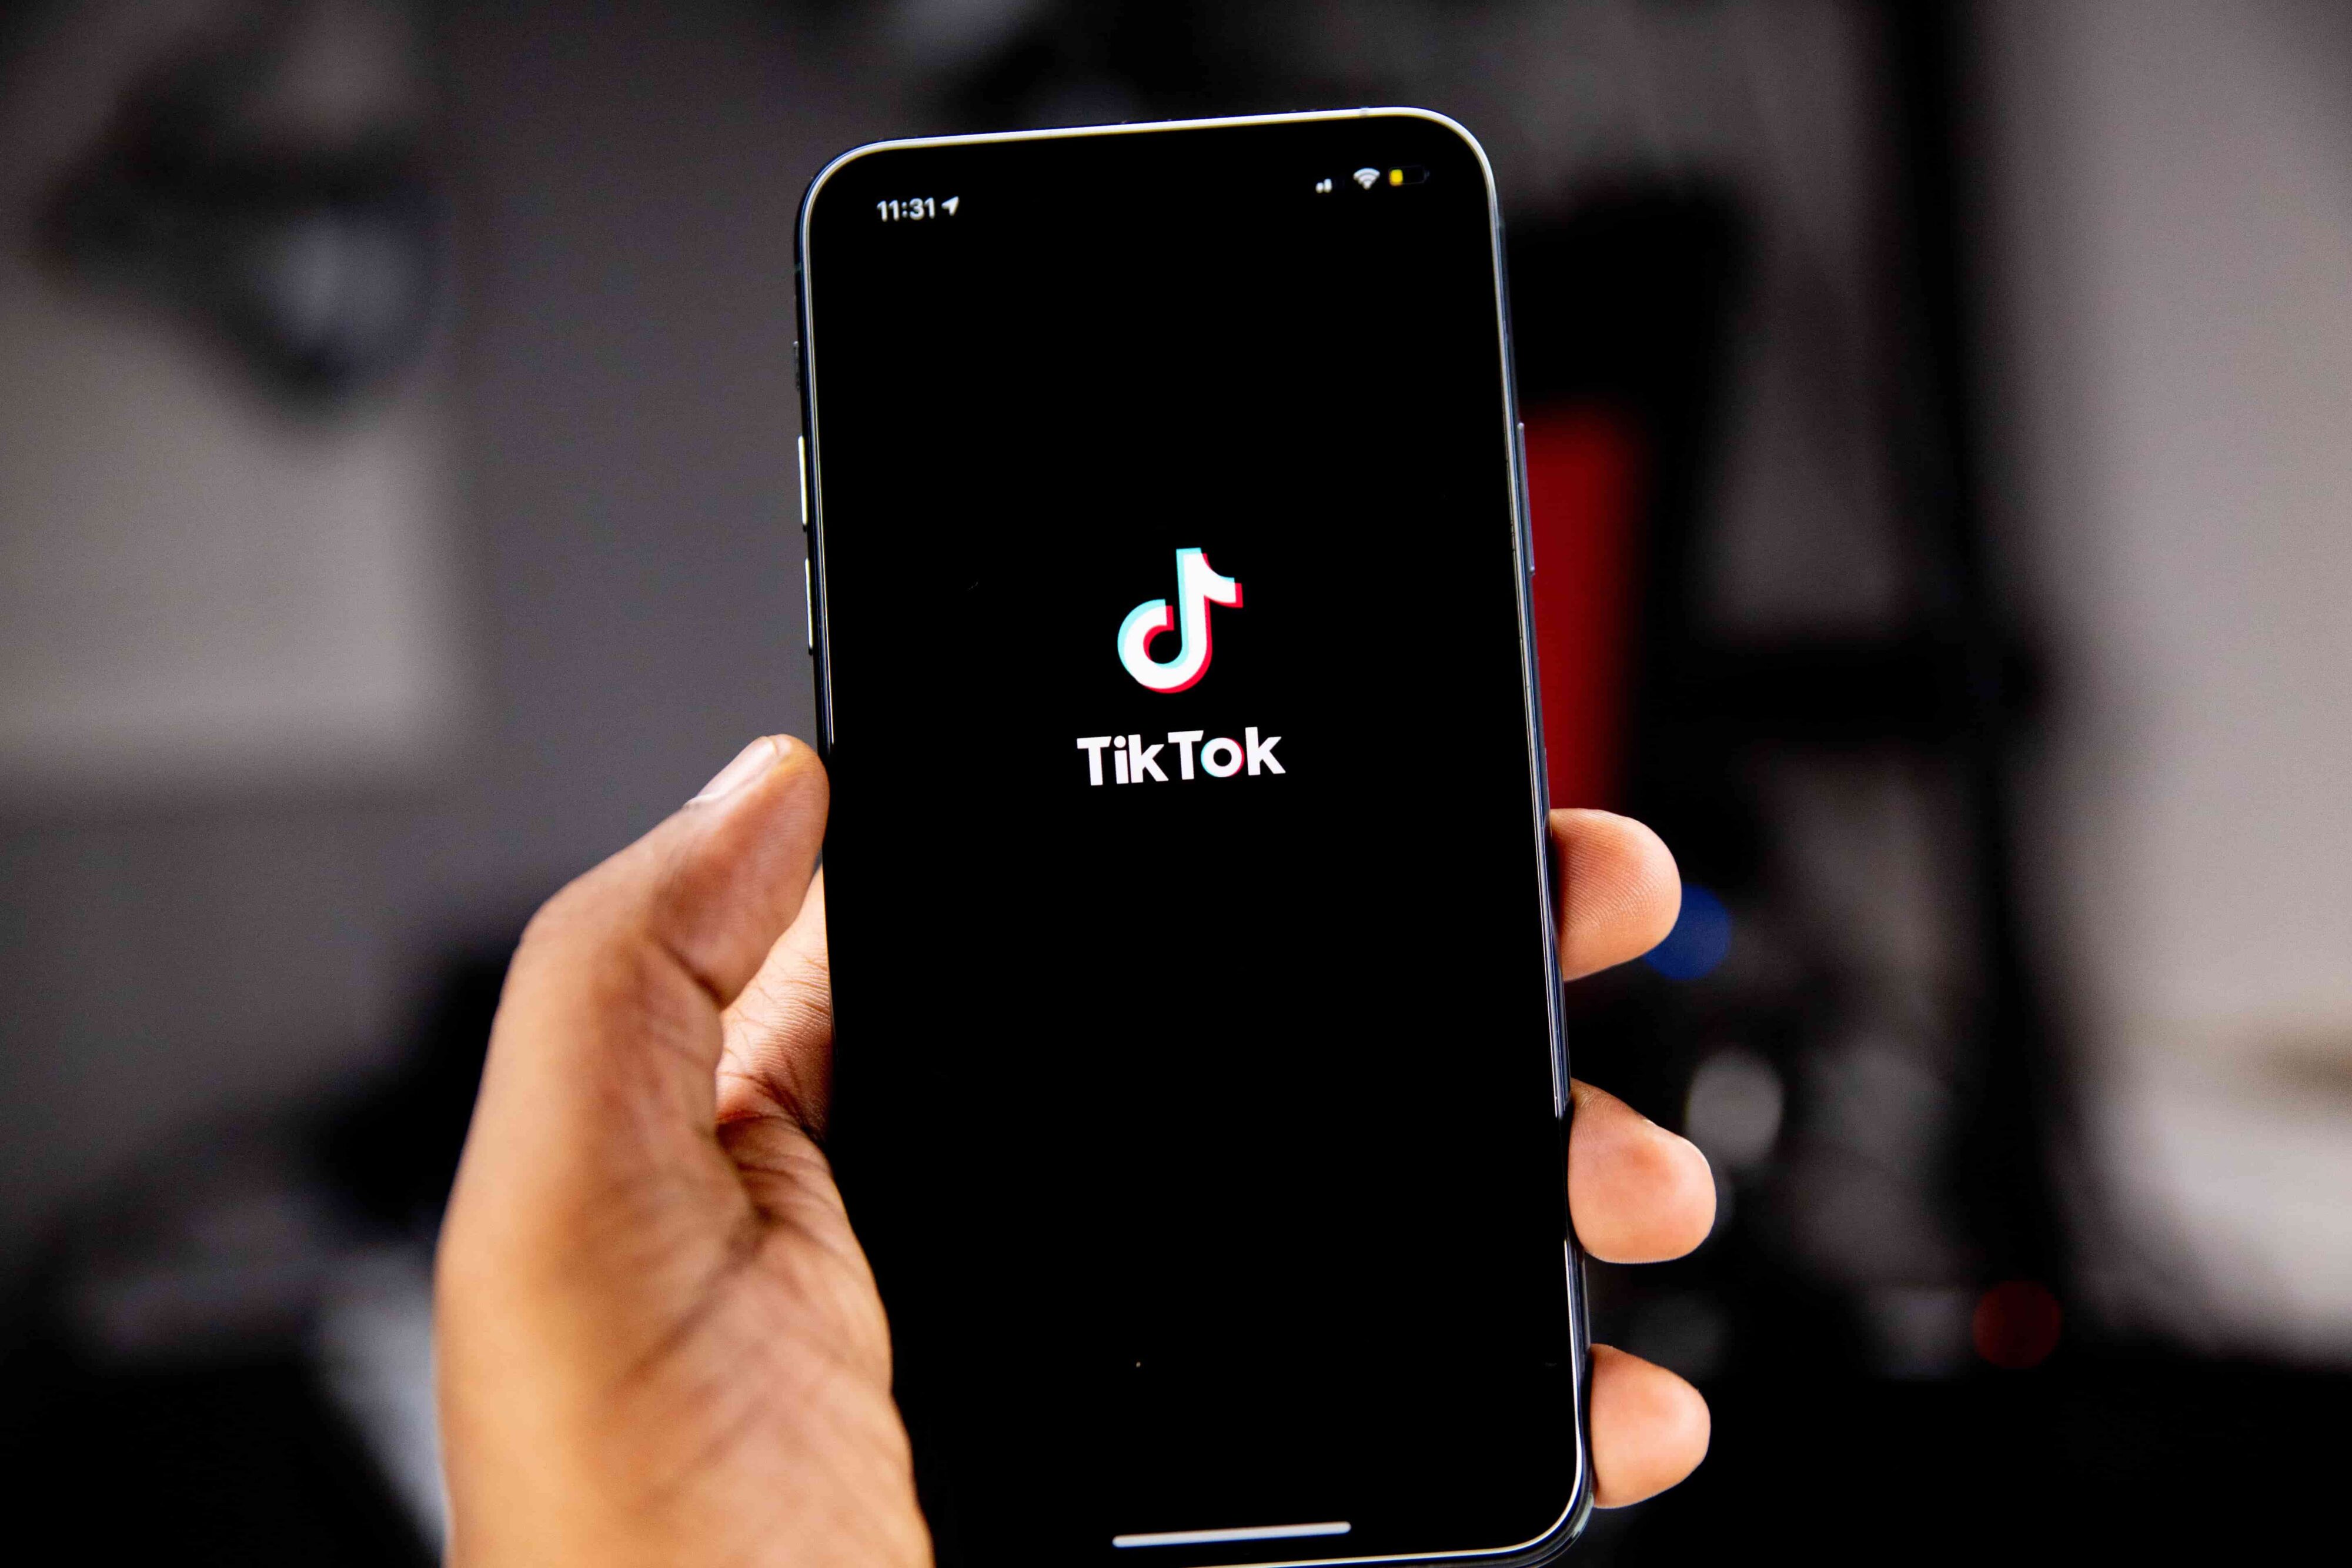 A mobiñe phone displaying the TikTok logo